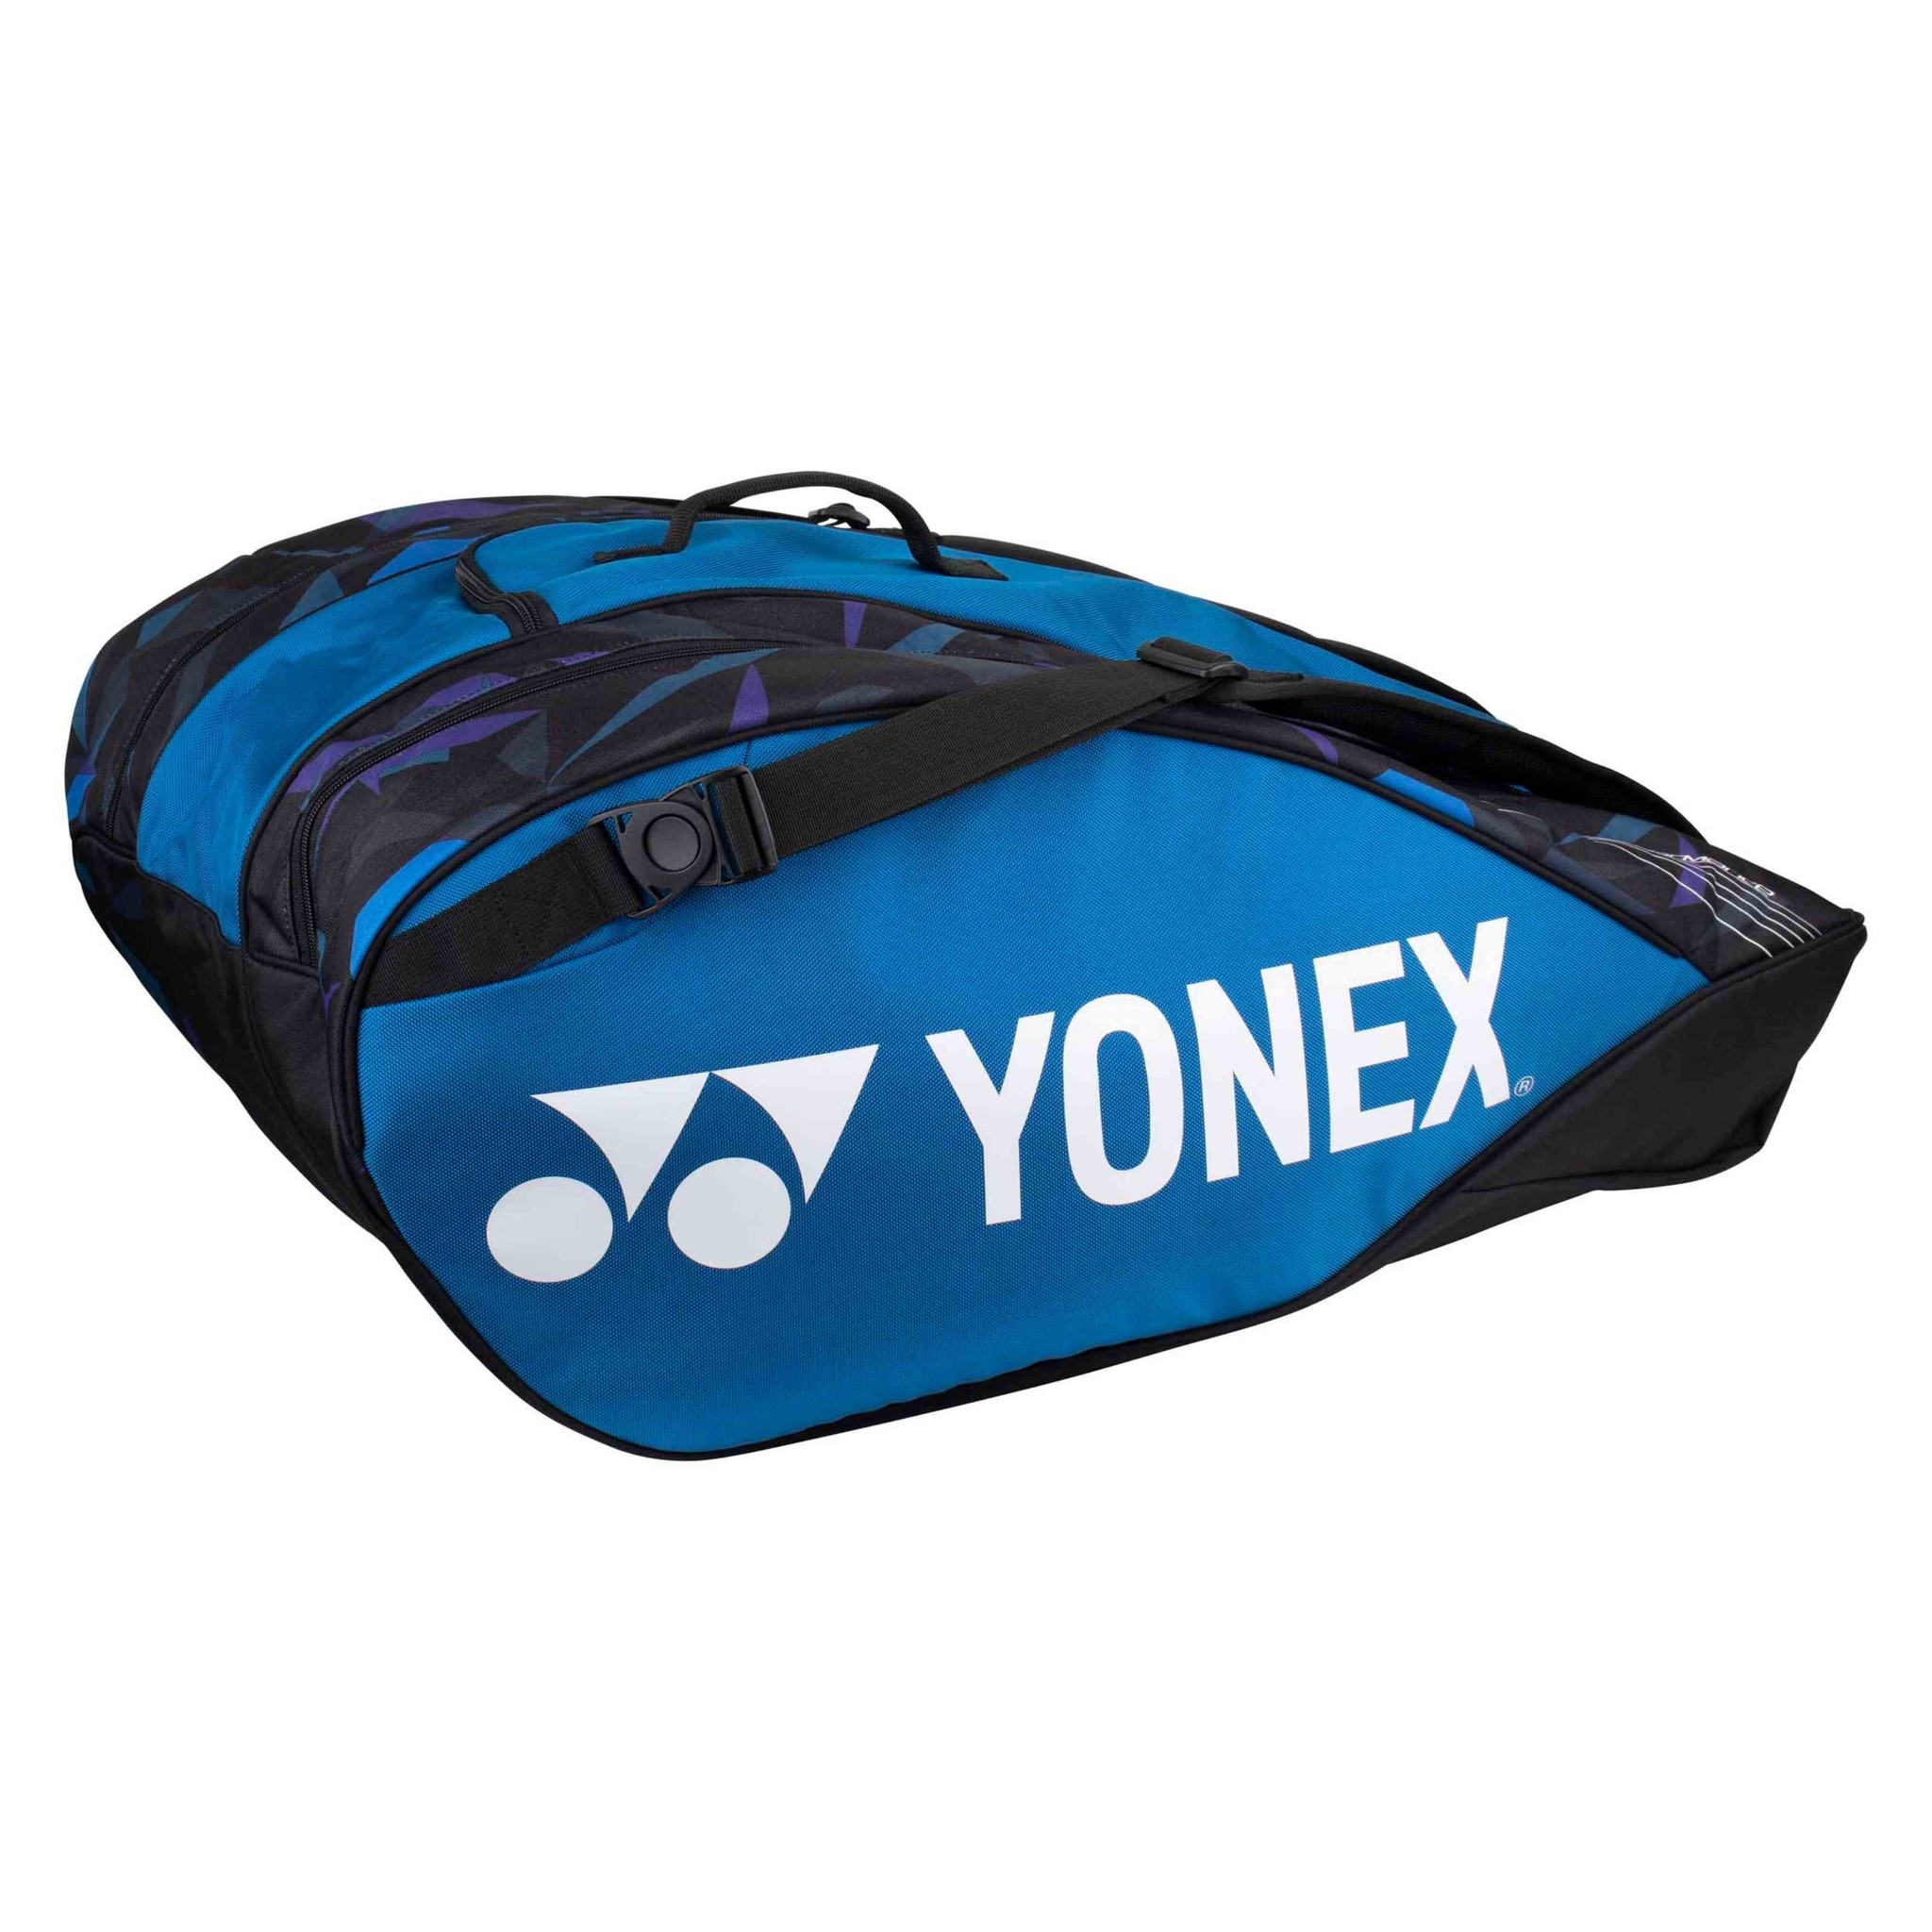 Yonex Pro Racket bag 922212 EX Fine Blue - KW FLEX racket specialist